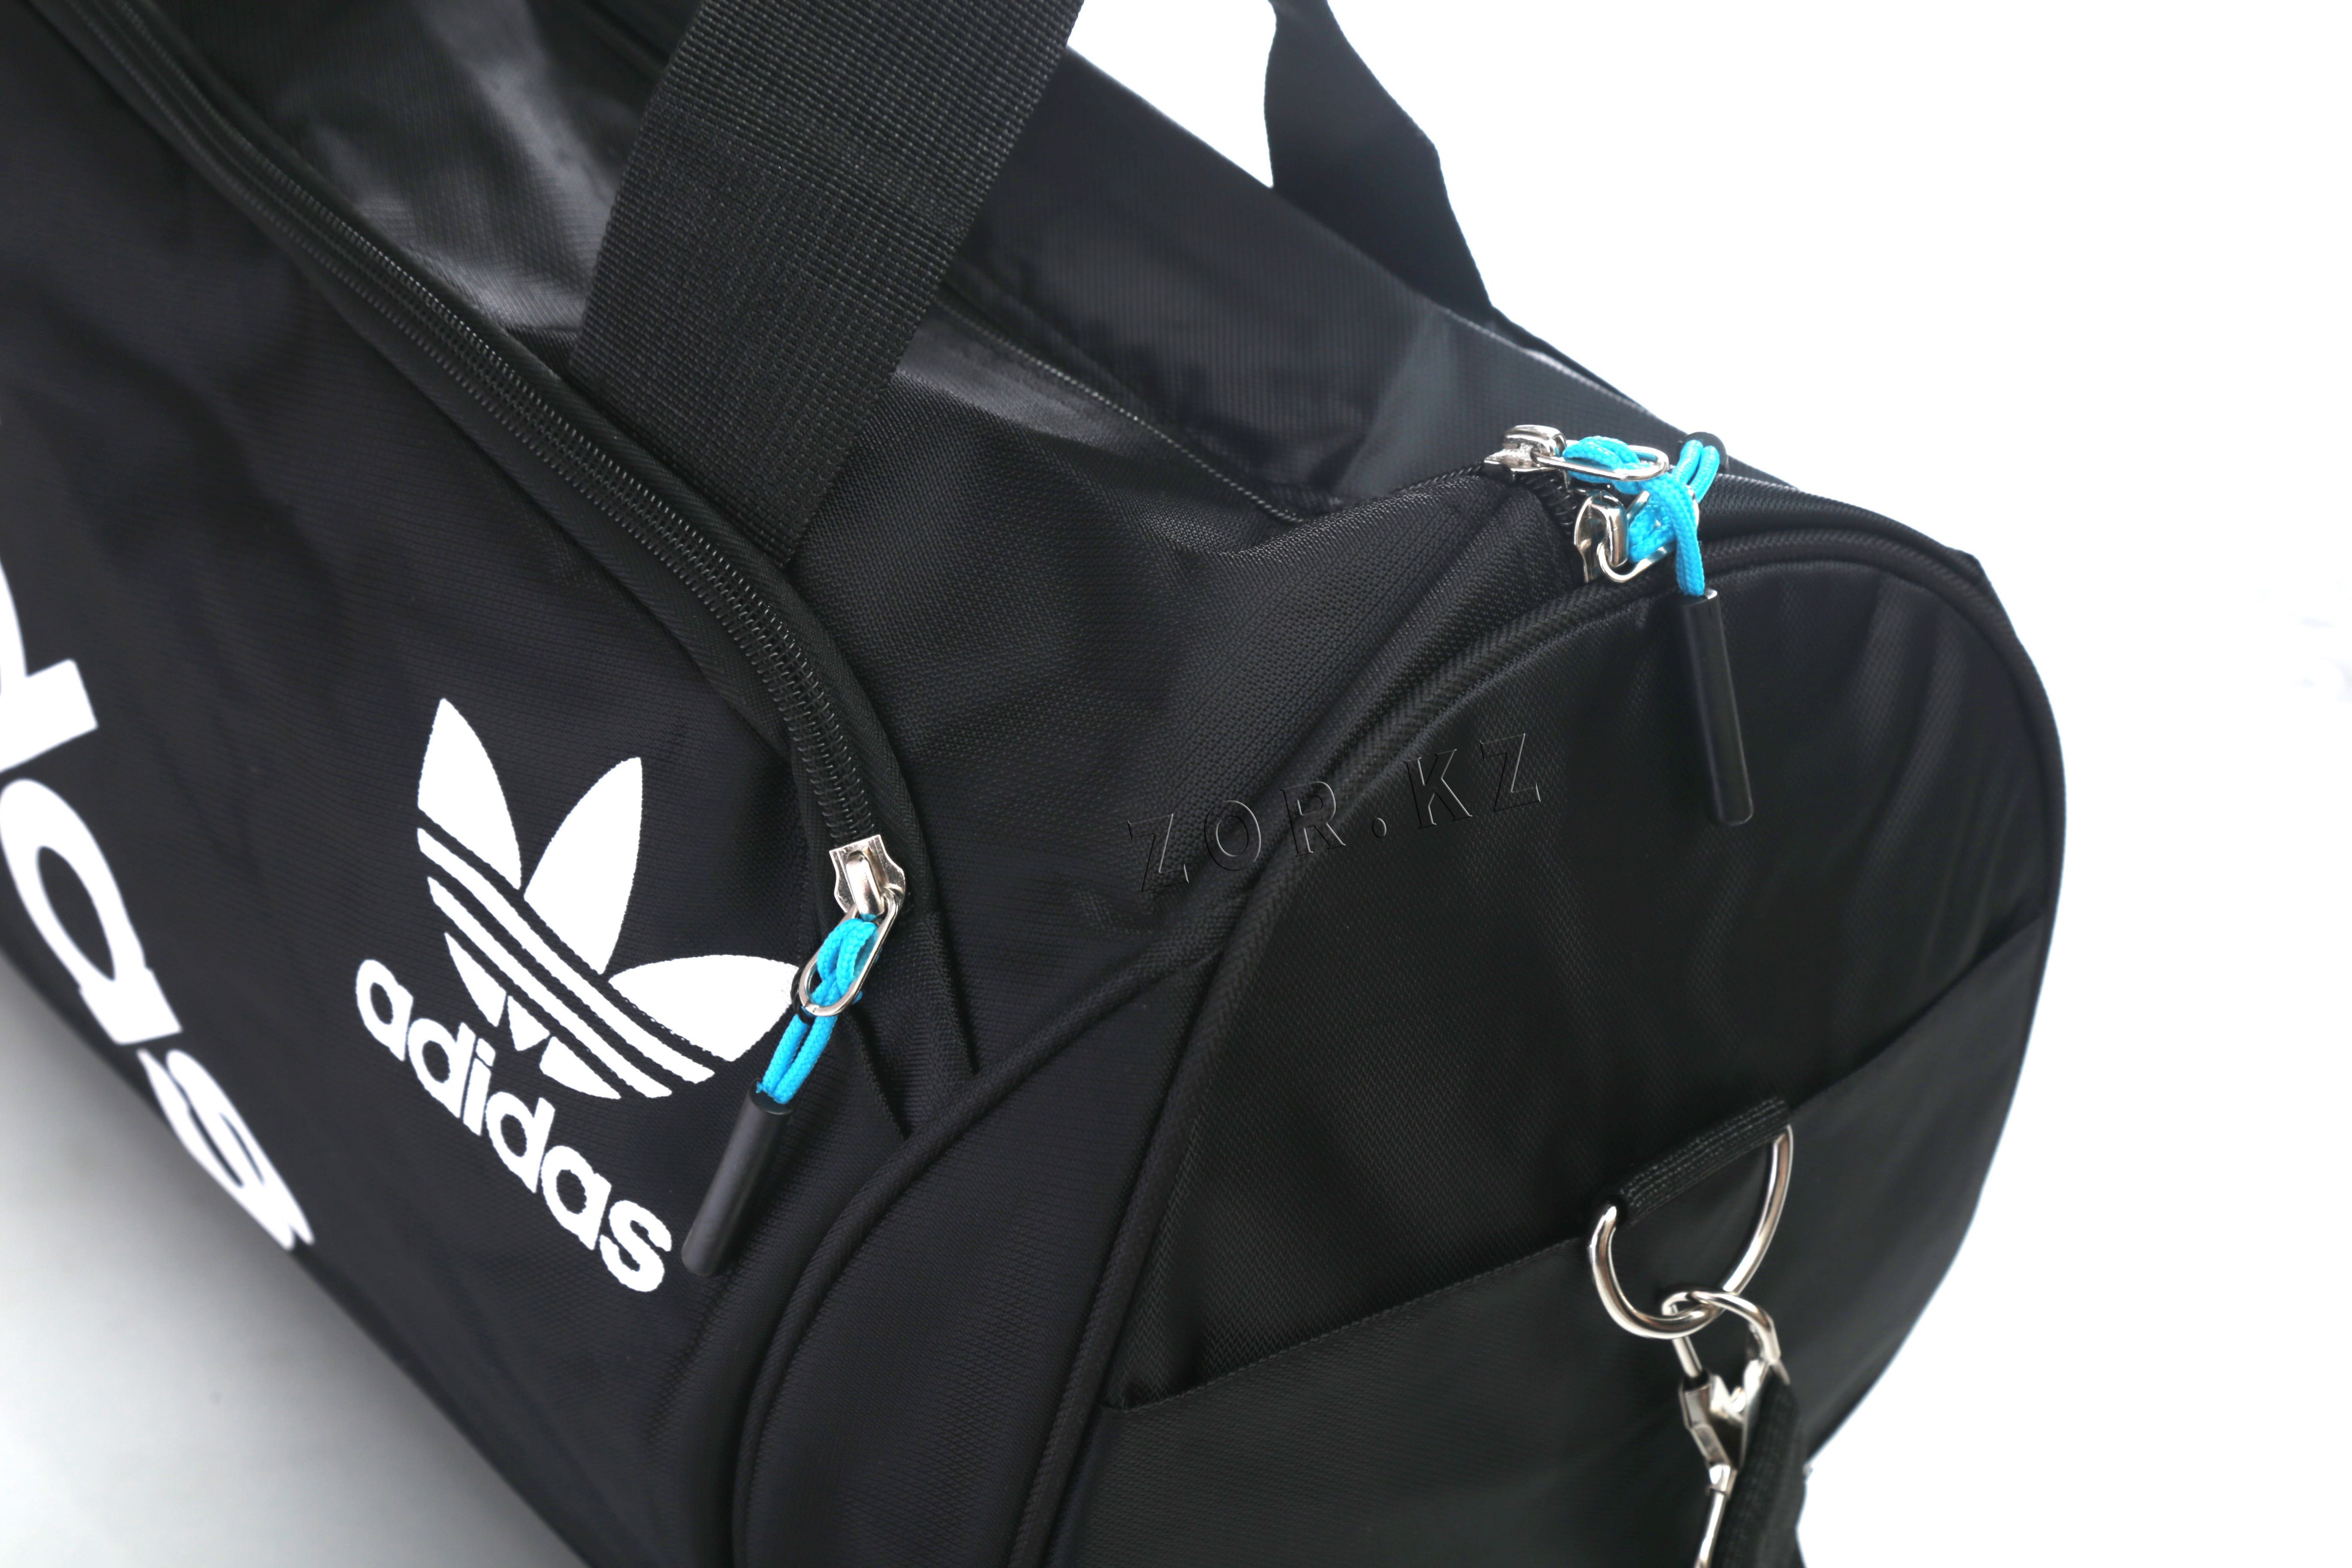 Adidas sport M93 сумка